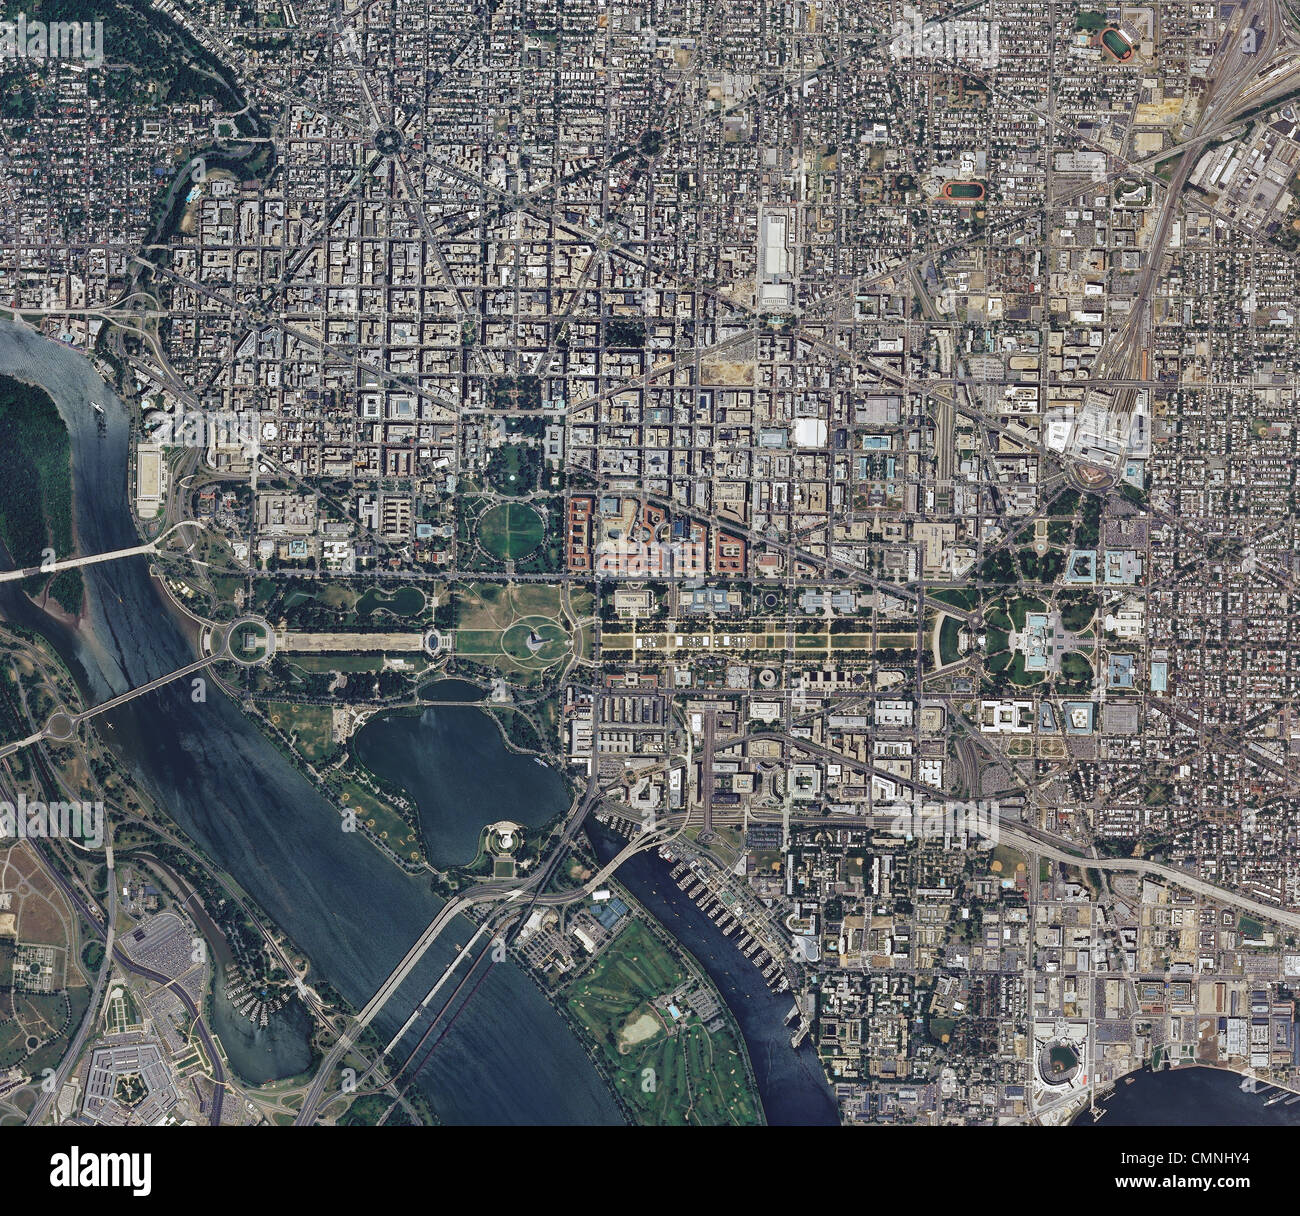 Luftbild-Karte von Washington, DC Stockfoto